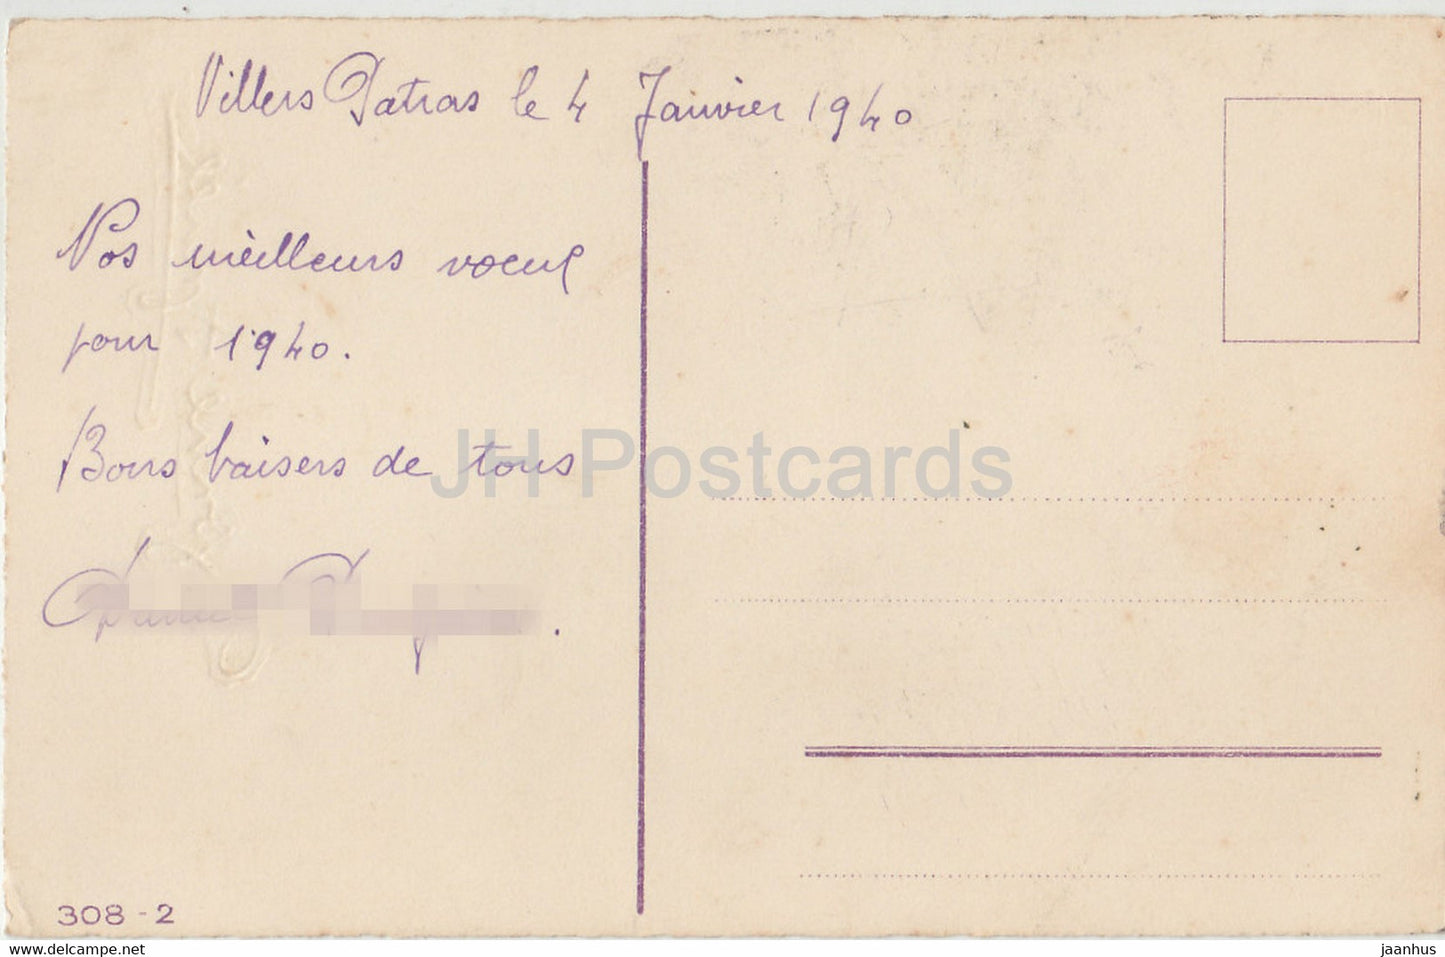 Birthday Greeting Card - Bonne Annee - flowers - tulips - 308-2 - illustration - old postcard - 1940 - France - used